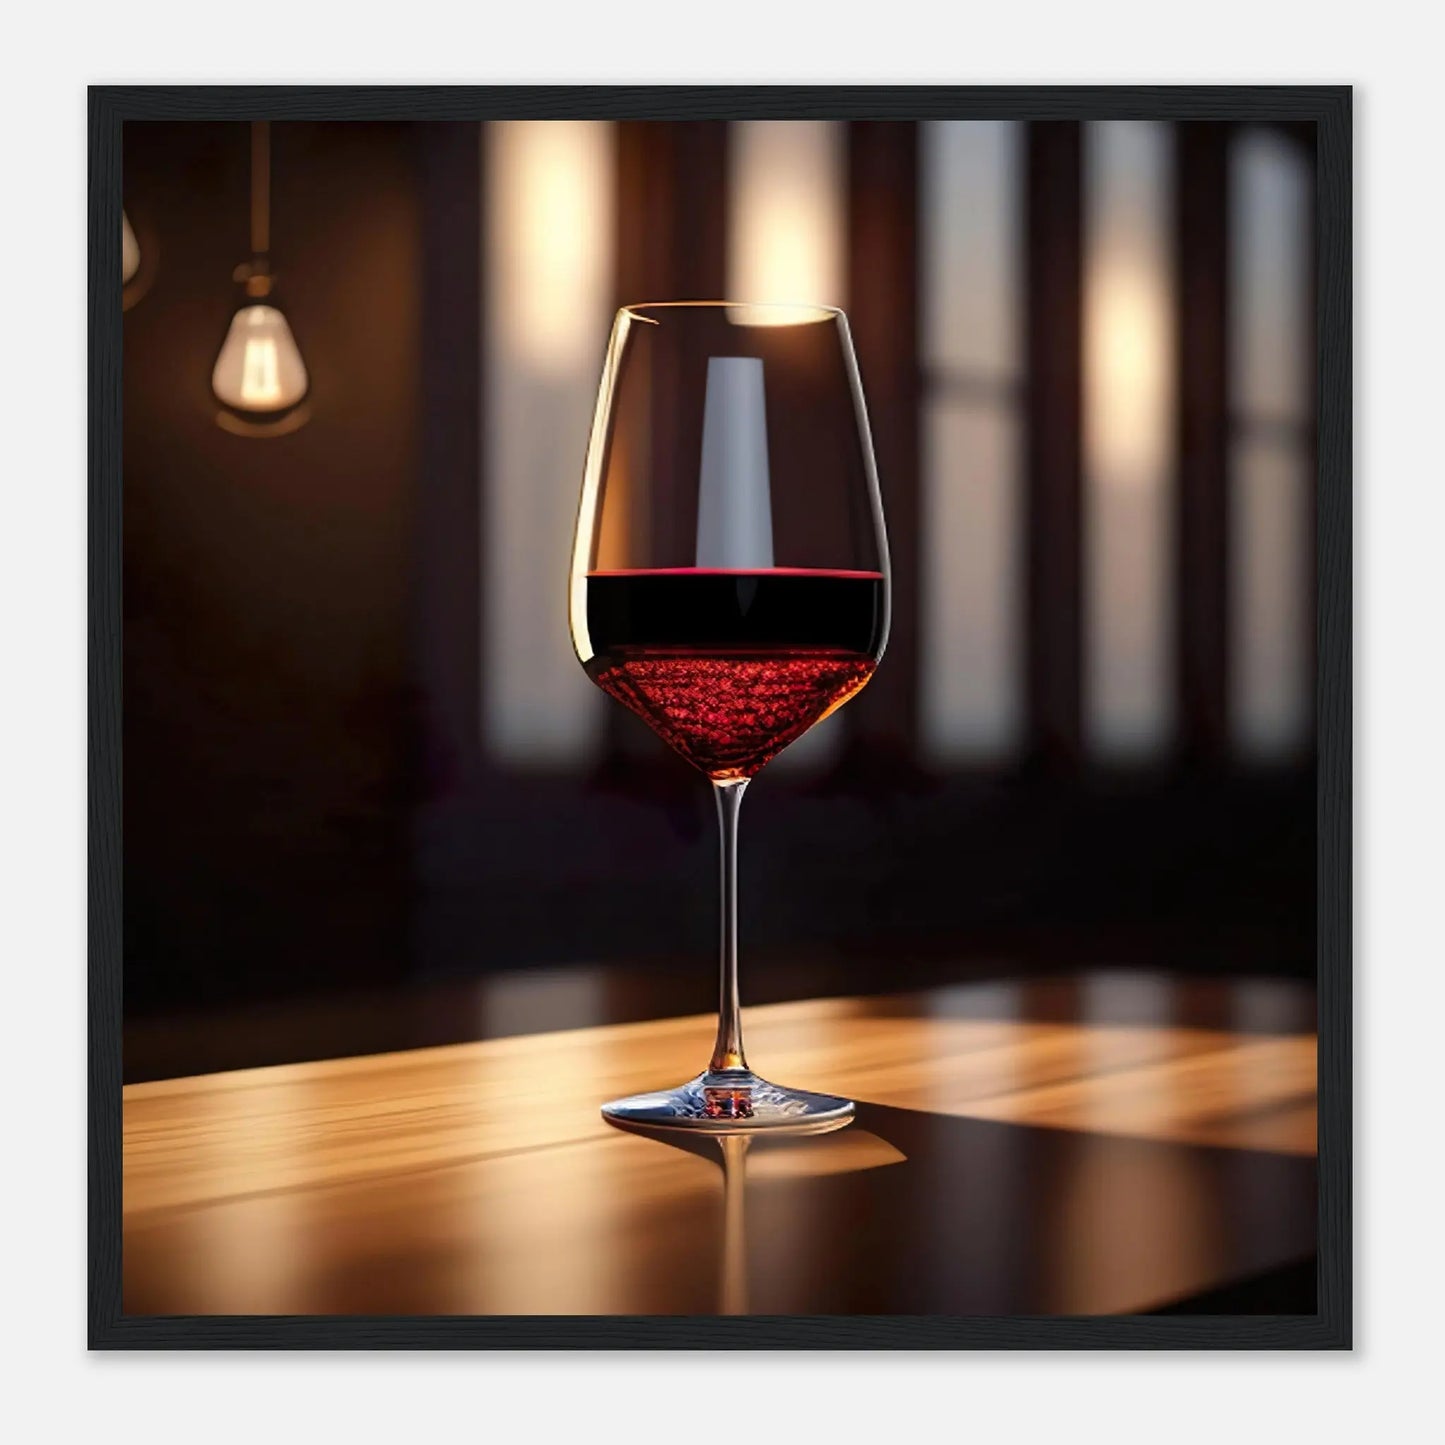 Gerahmtes Premium-Poster - Rotwein im Glas - Foto Stil, KI-Kunst - RolConArt, Kreative Vielfalt, 50x50-cm-20x20-Schwarzer-Rahmen